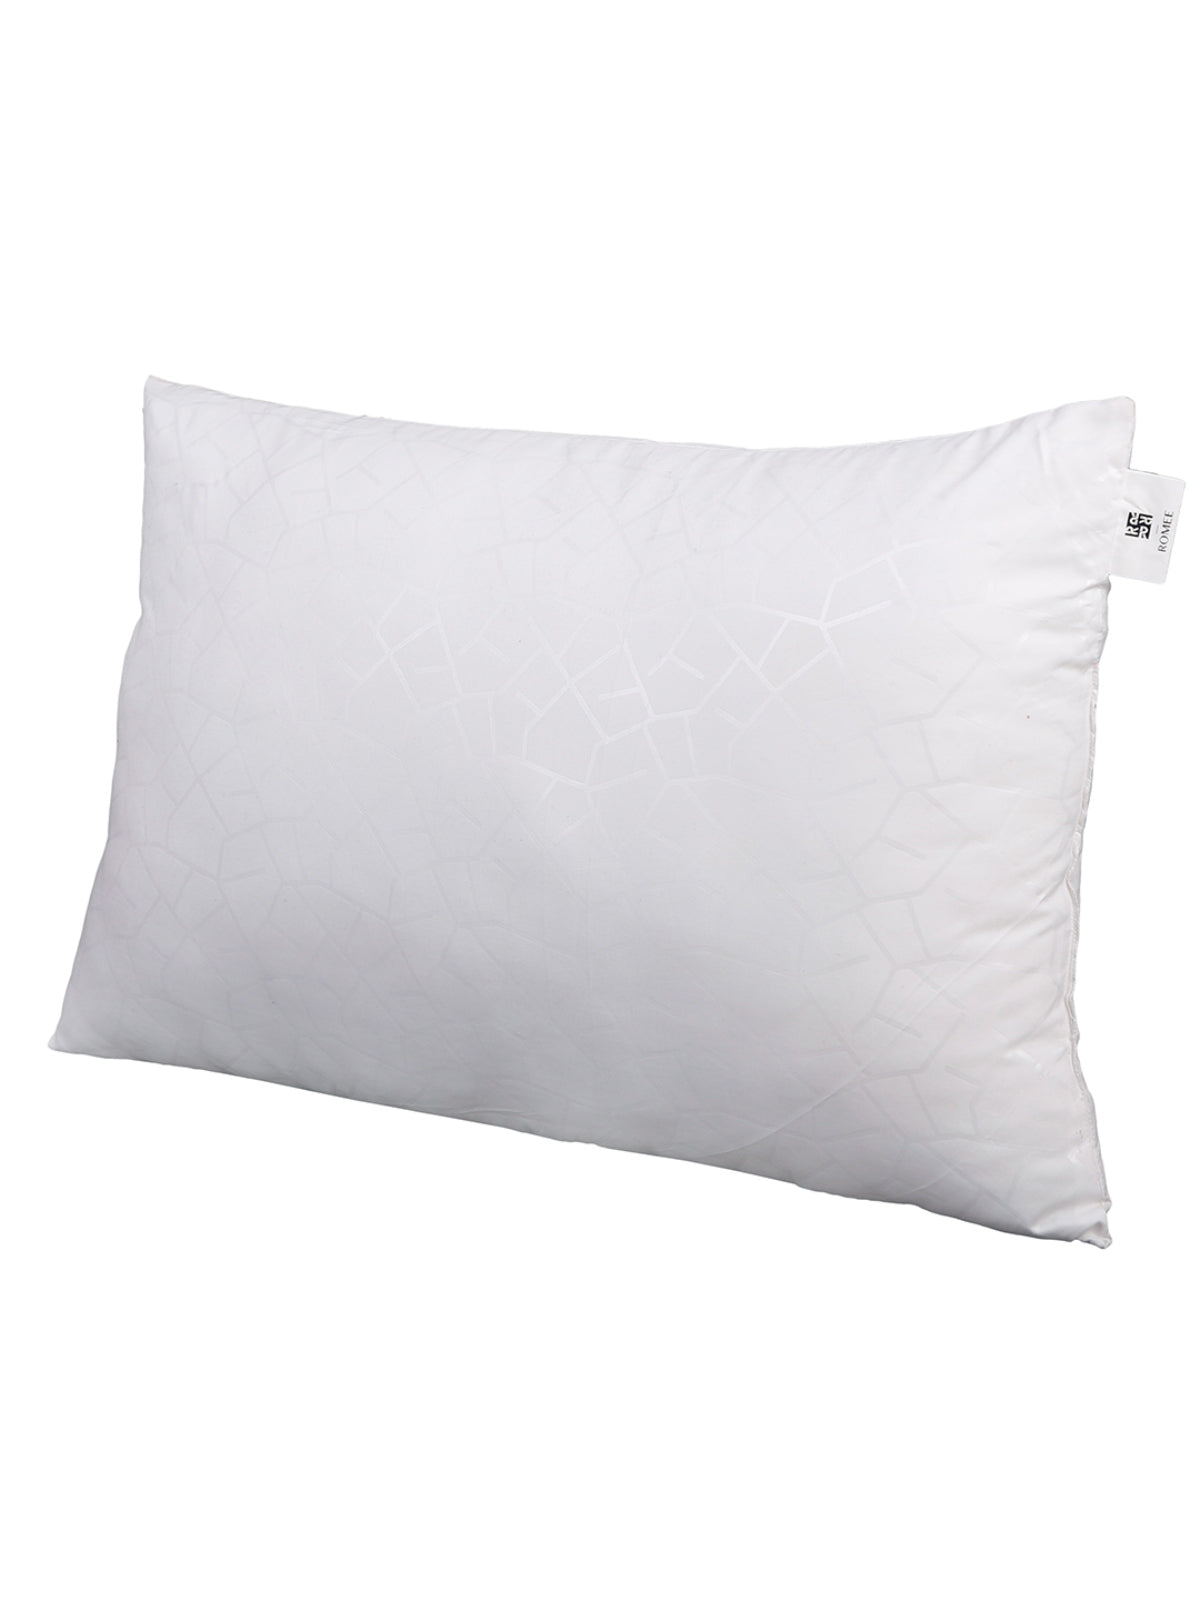 White Set of 2 Cushions